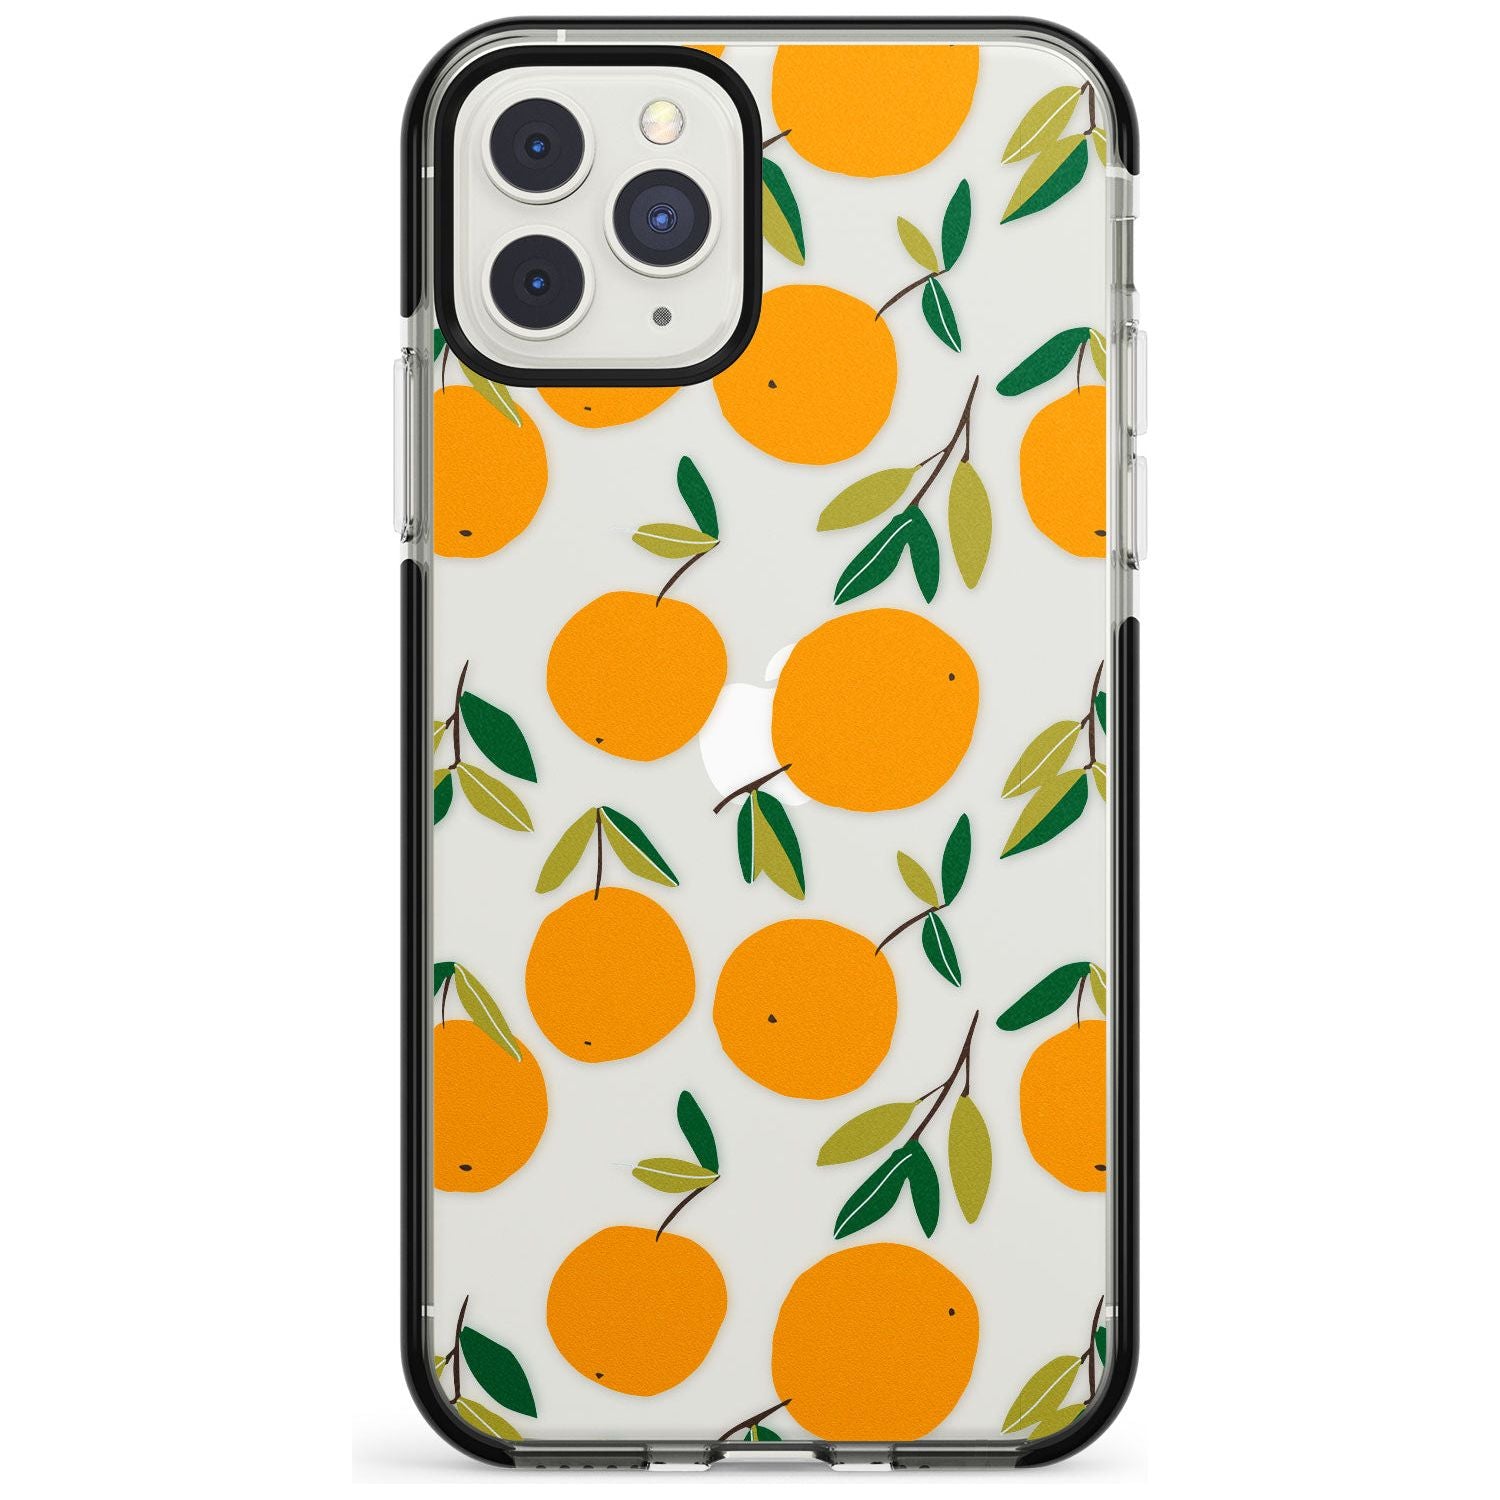 Oranges Pattern Black Impact Phone Case for iPhone 11 Pro Max